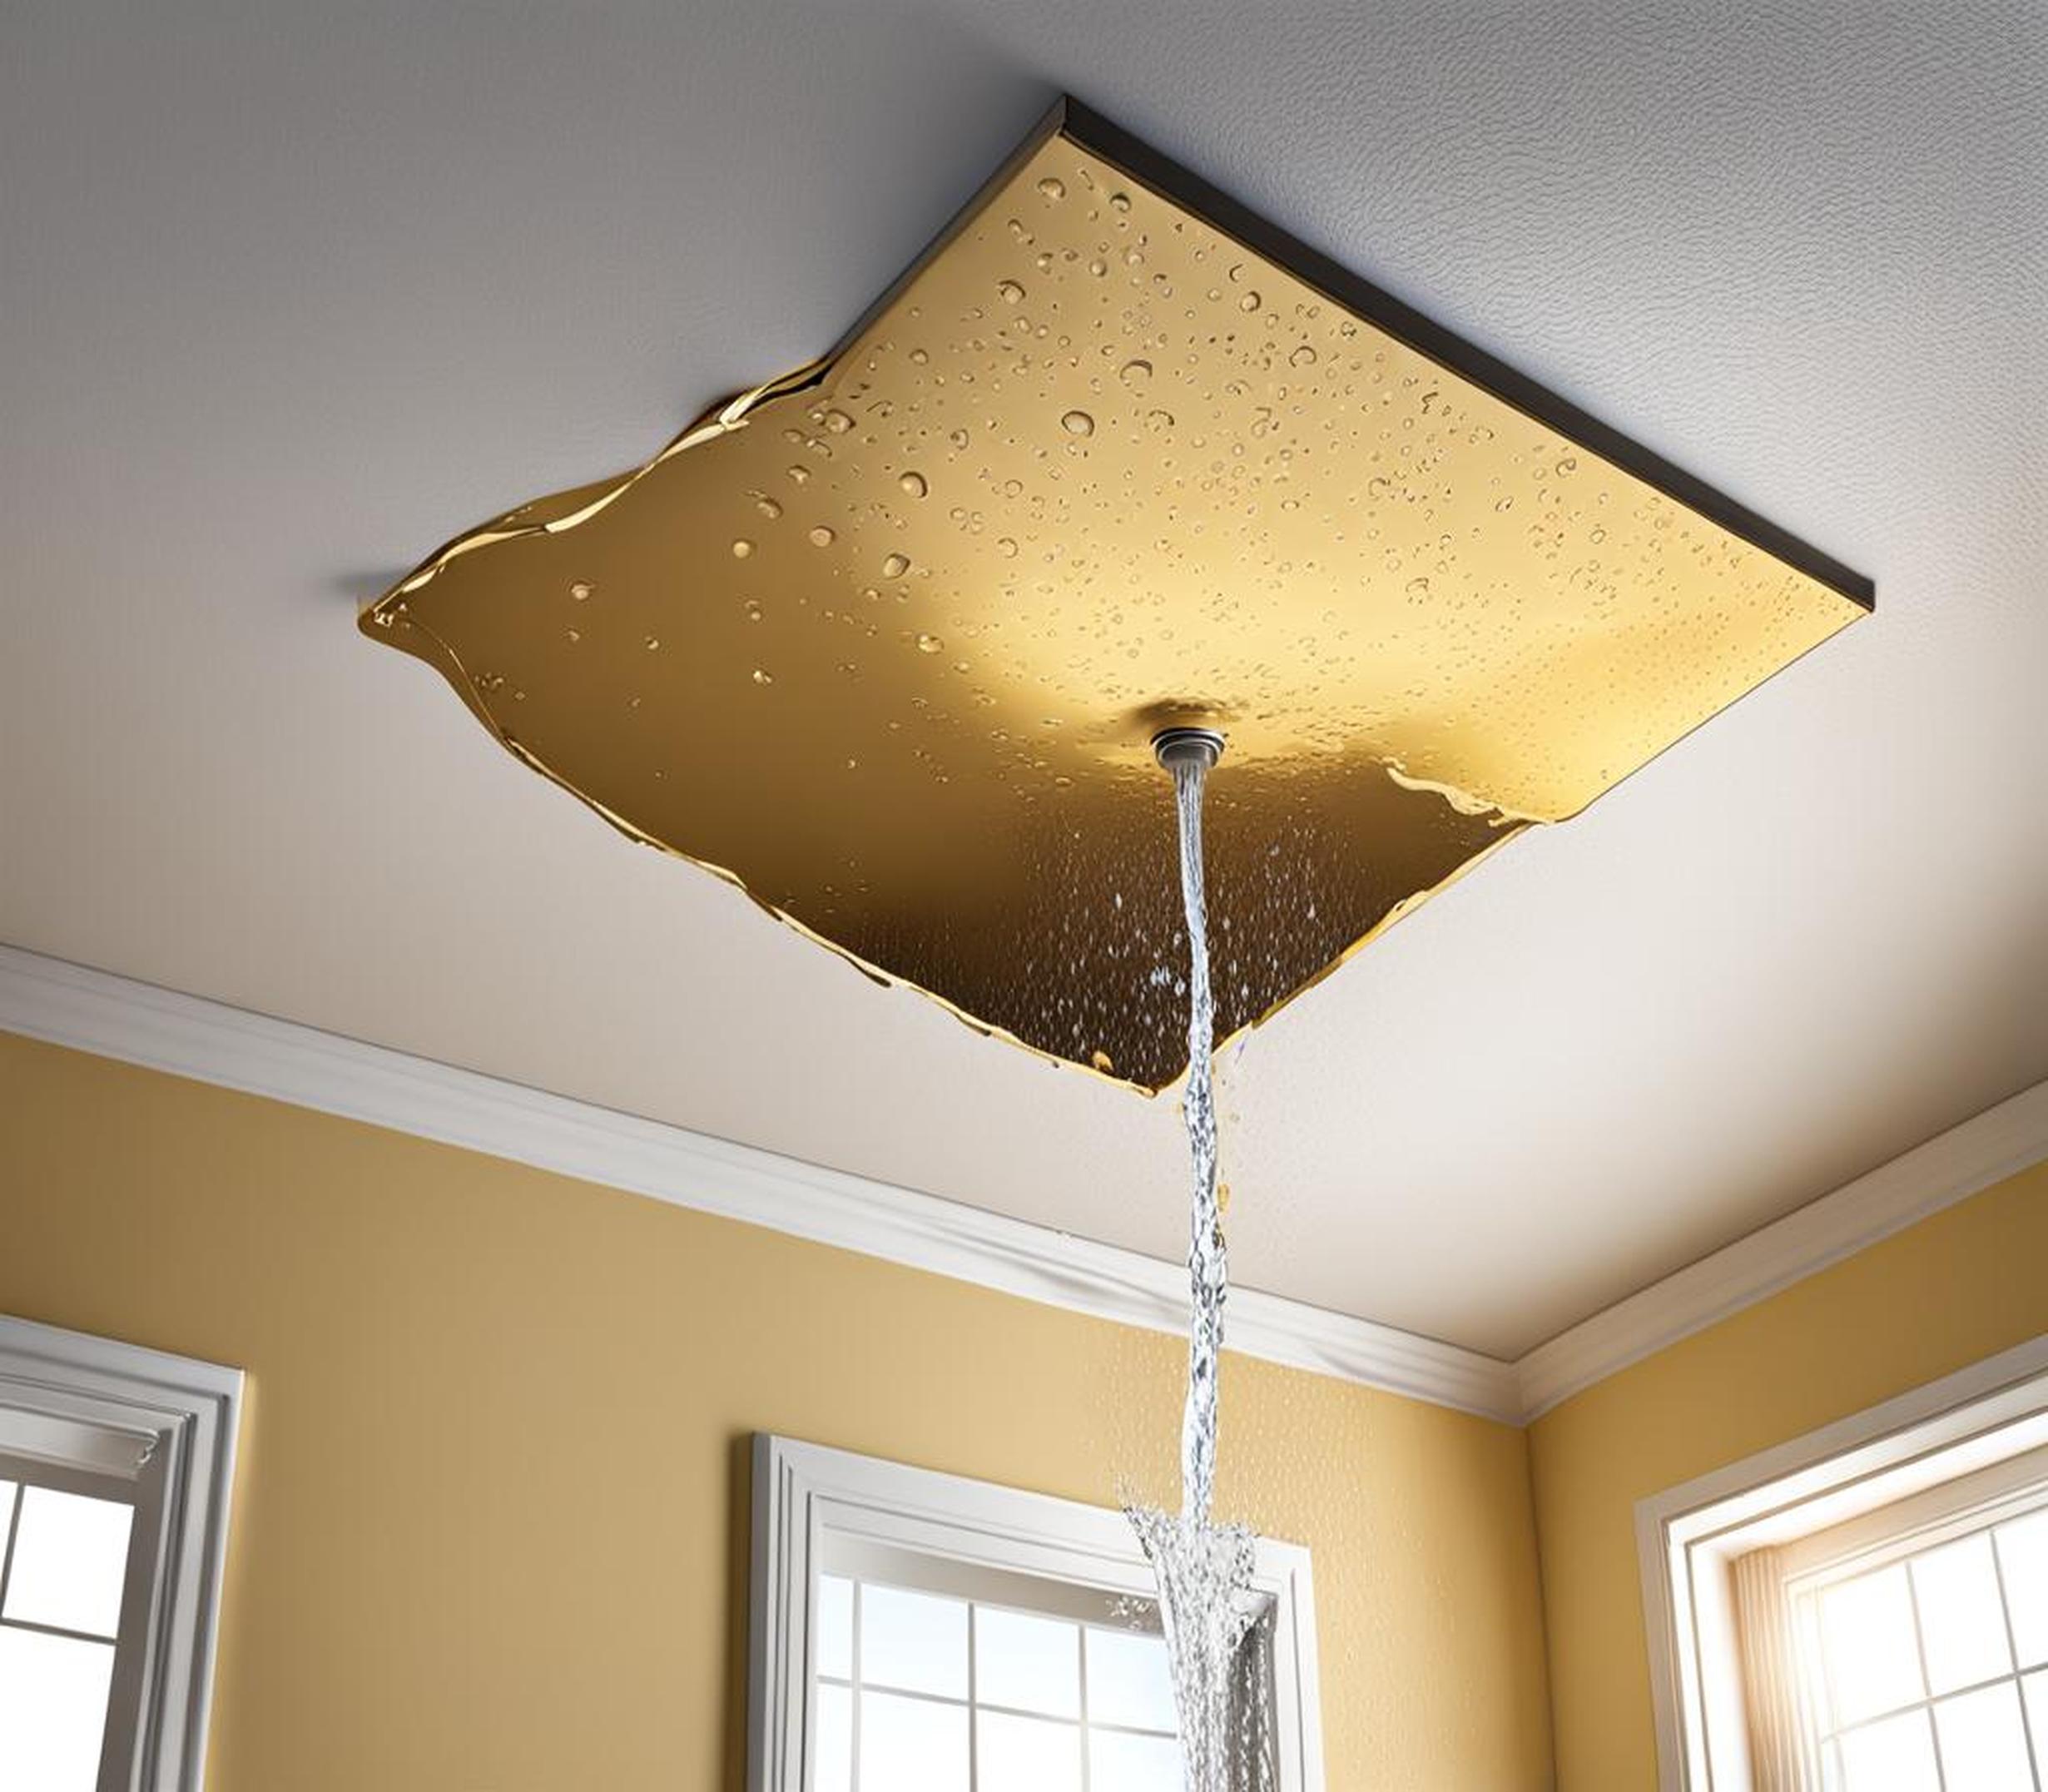 water leaking from ceiling under bathroom